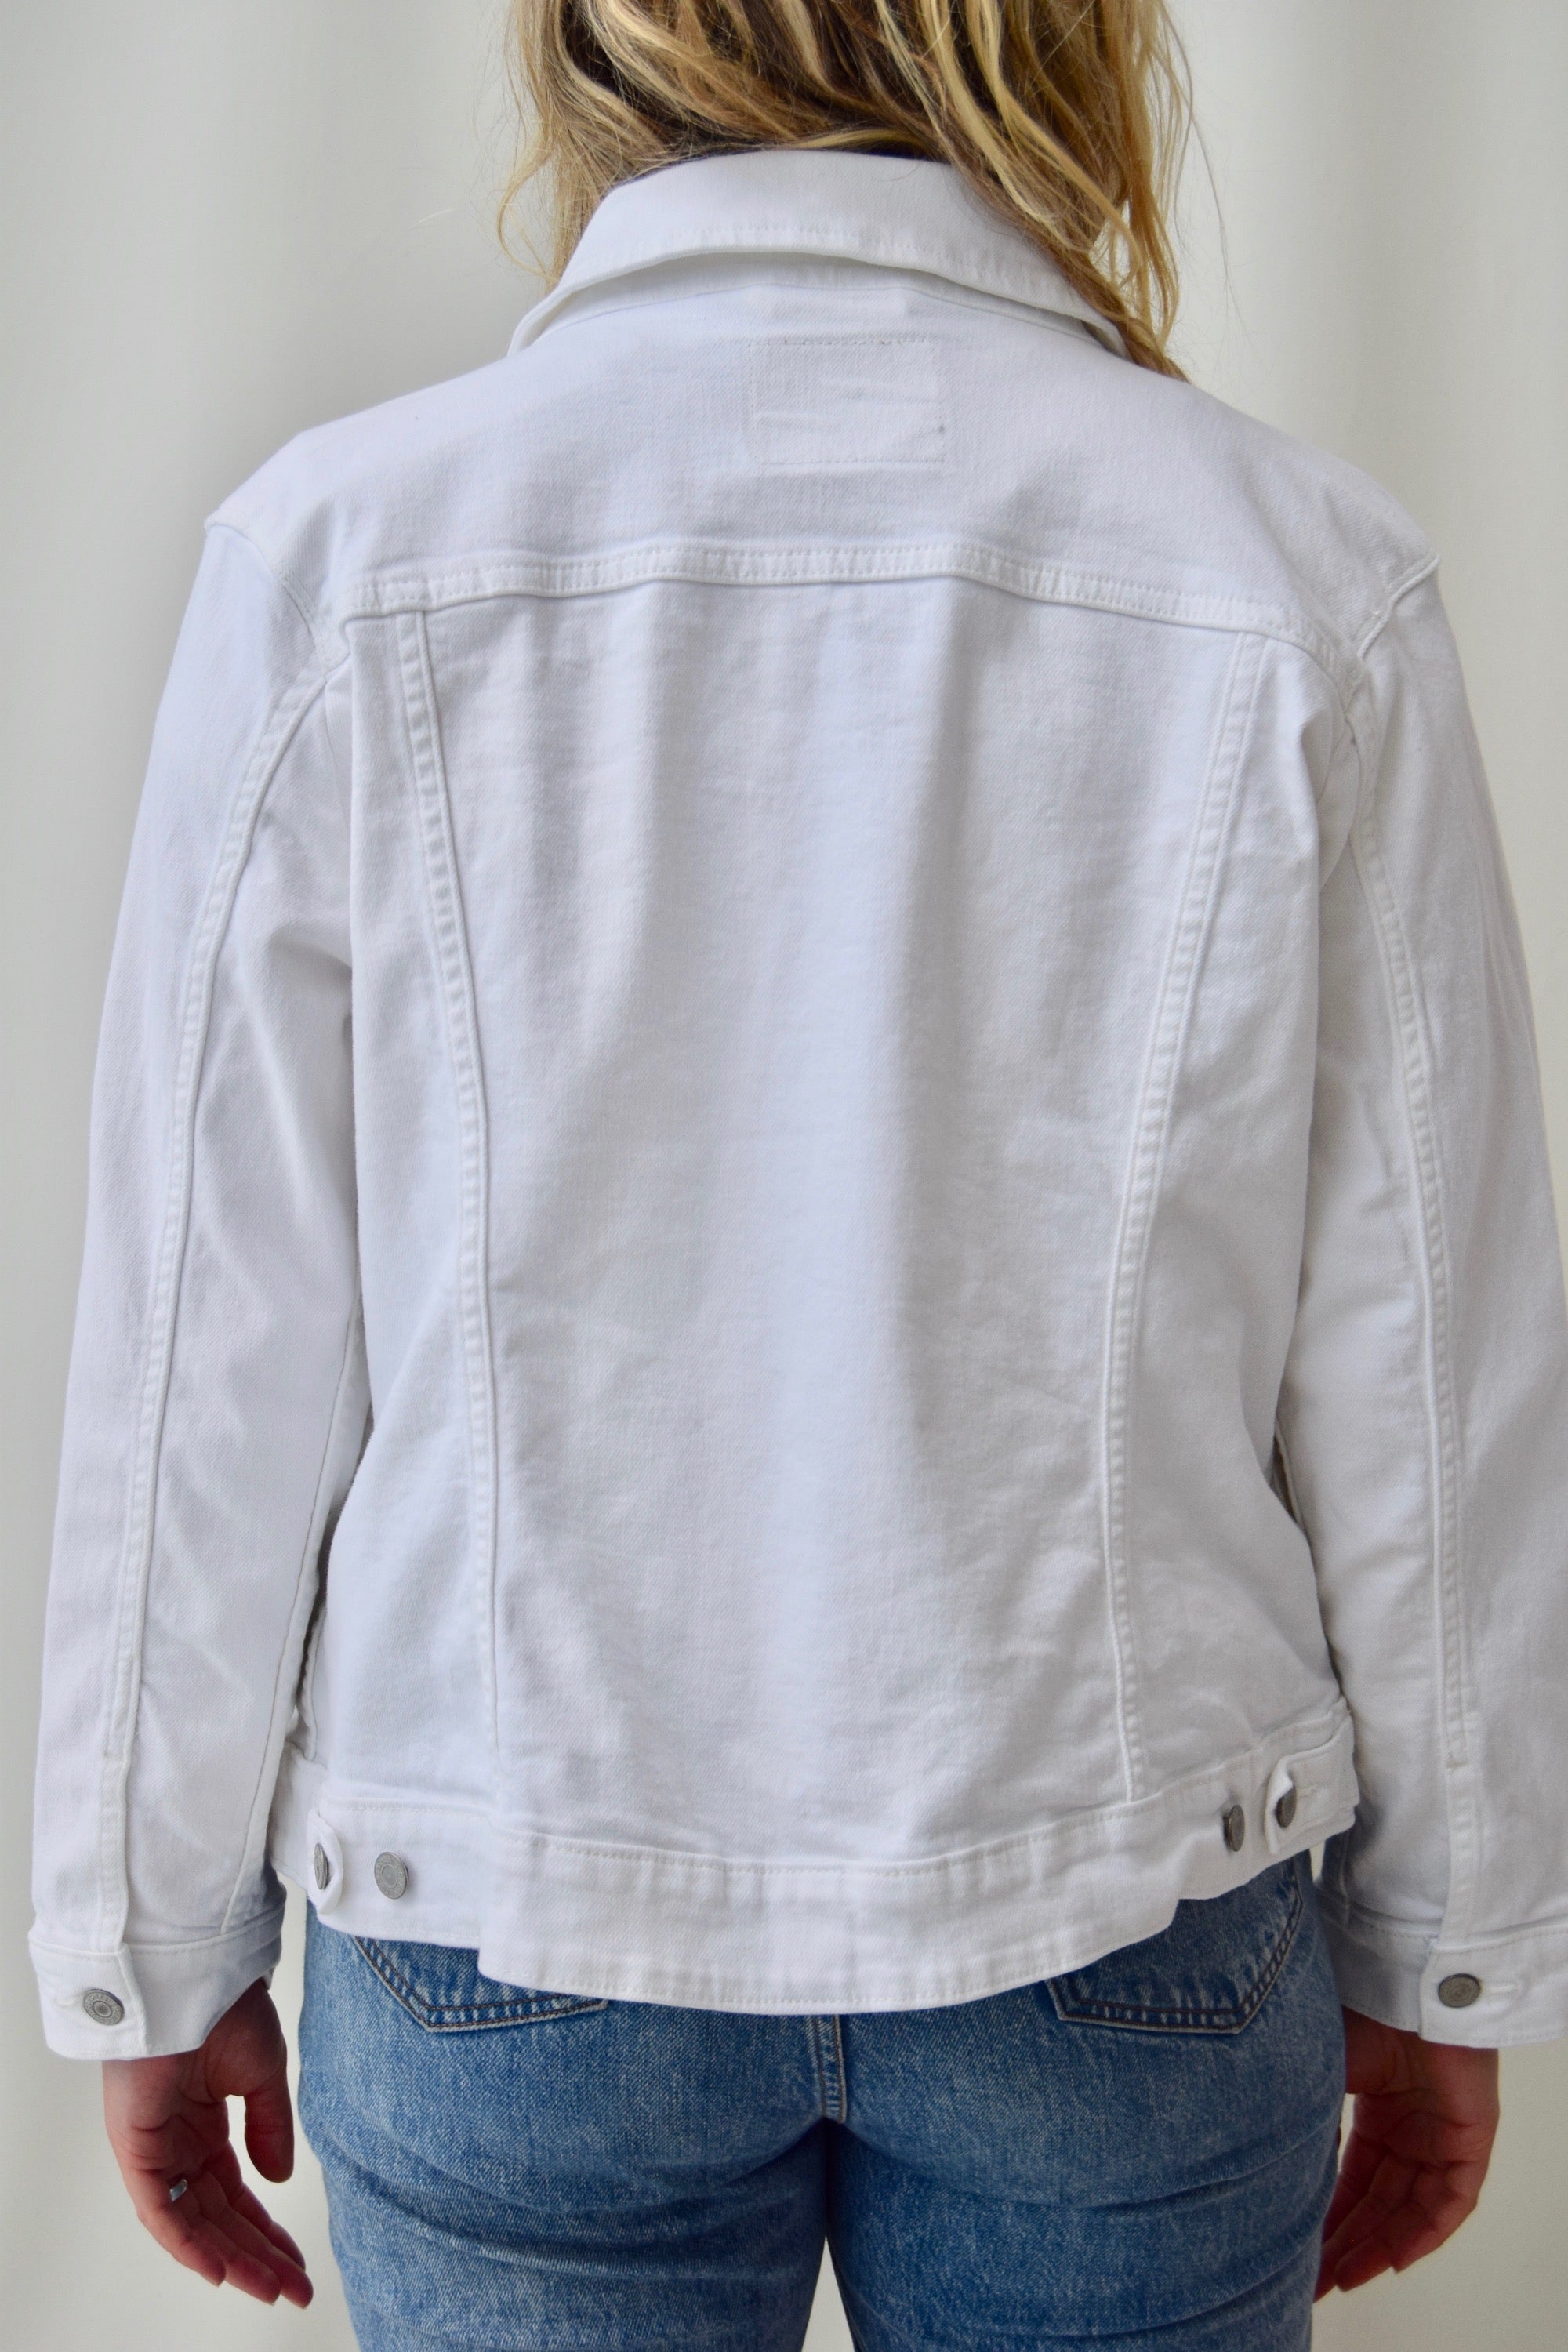 Levi's White Denim Jacket